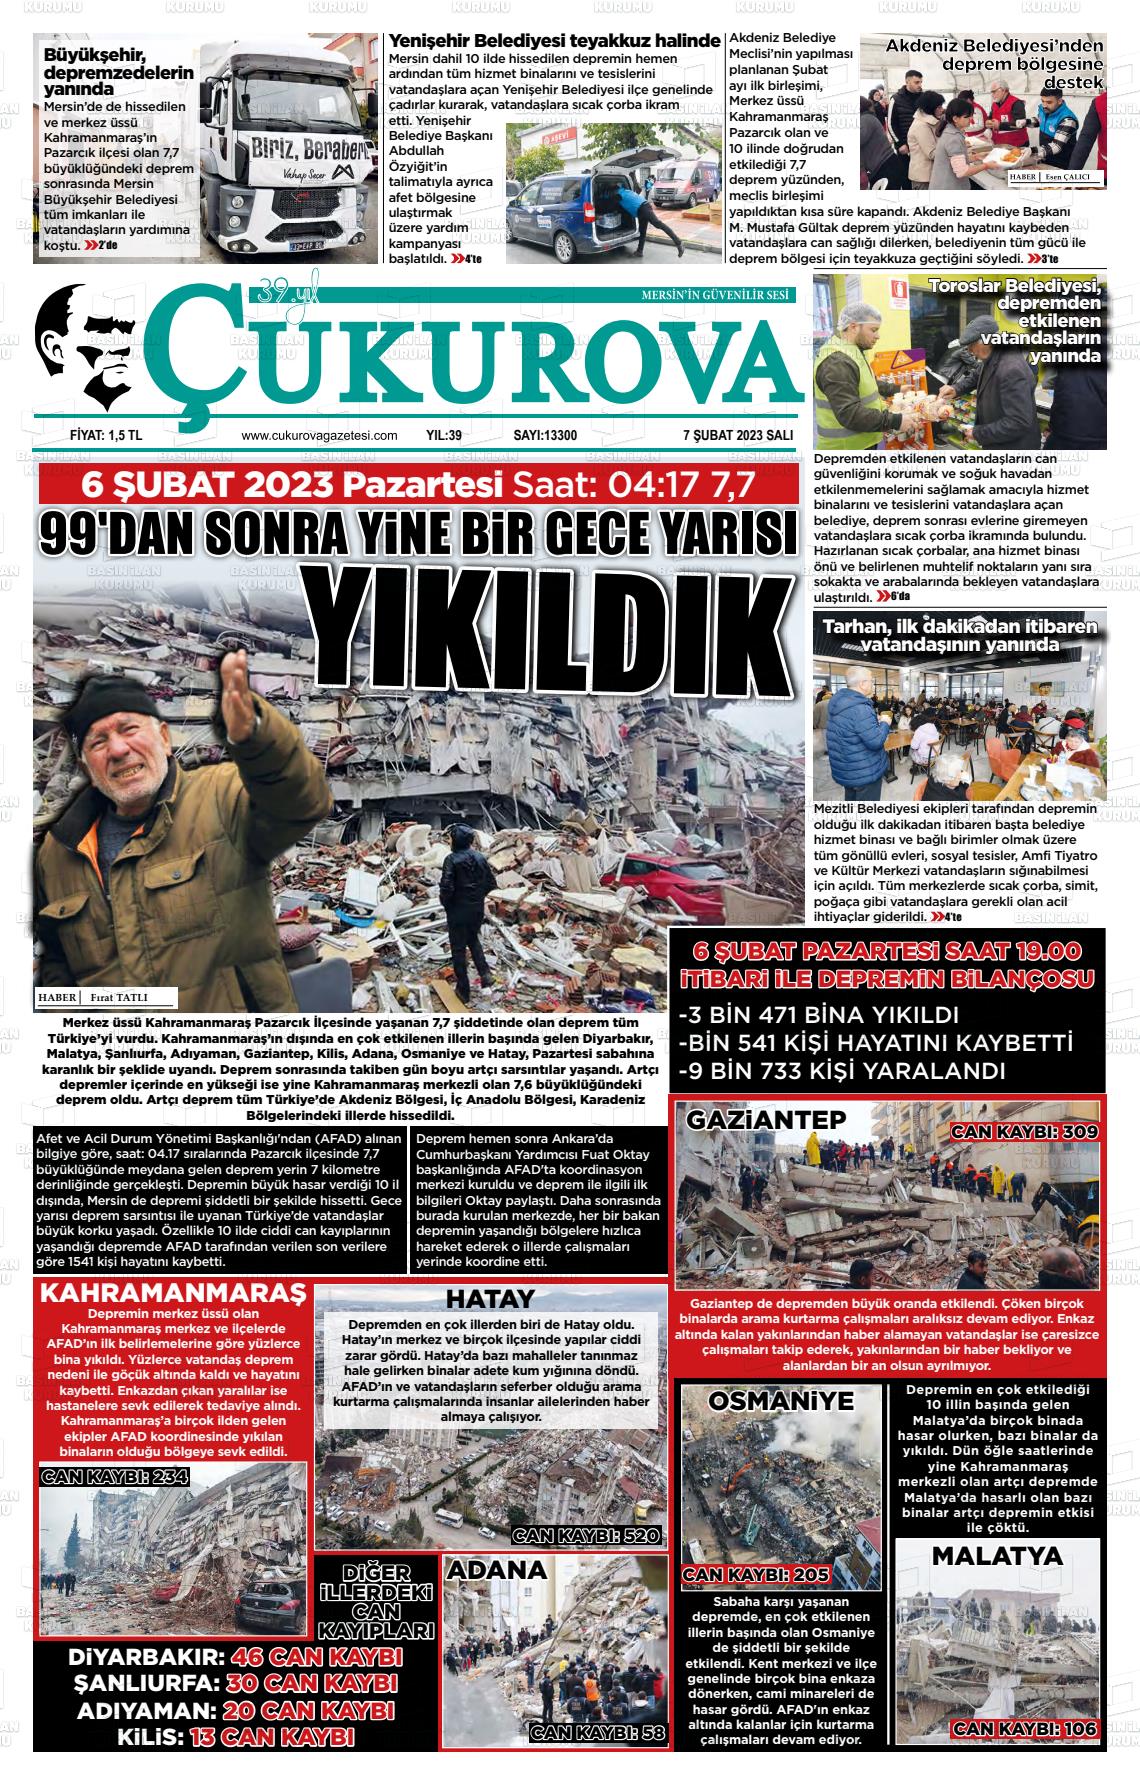 07 Şubat 2023 Çukurova Gazete Manşeti